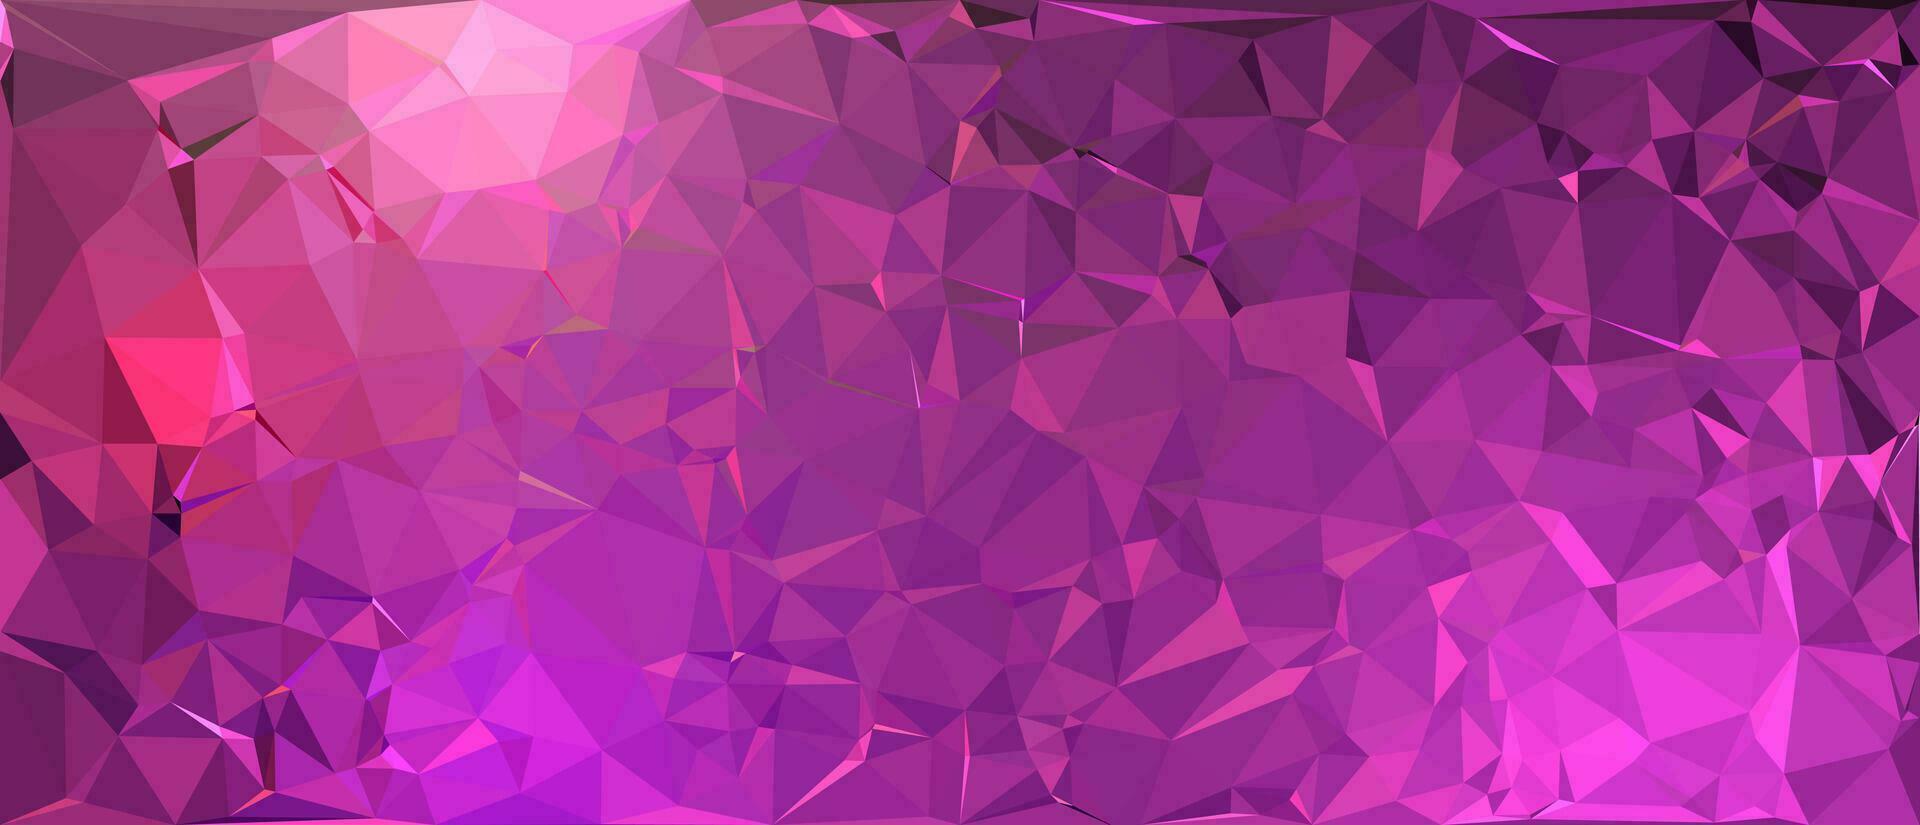 driehoek poly prisma achtergrond met gloeiend verhelderend licht in roze Purper toon kleur mozaïek- stijl patroon. vector